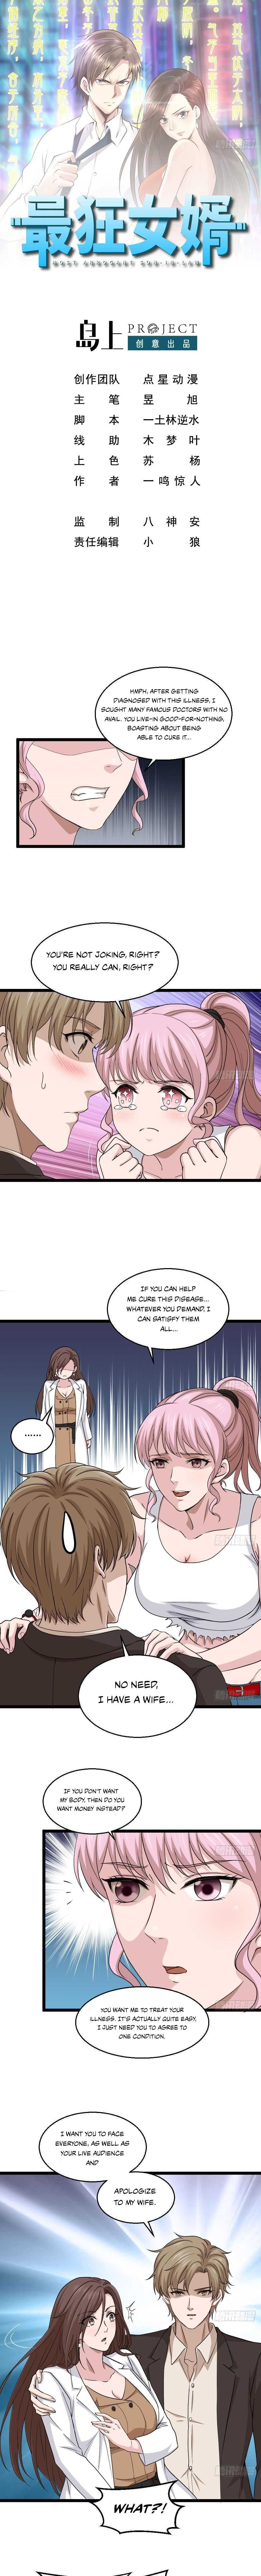 20 Nen De Iroiro Kawatchatta Manga - chapter 15 - #2